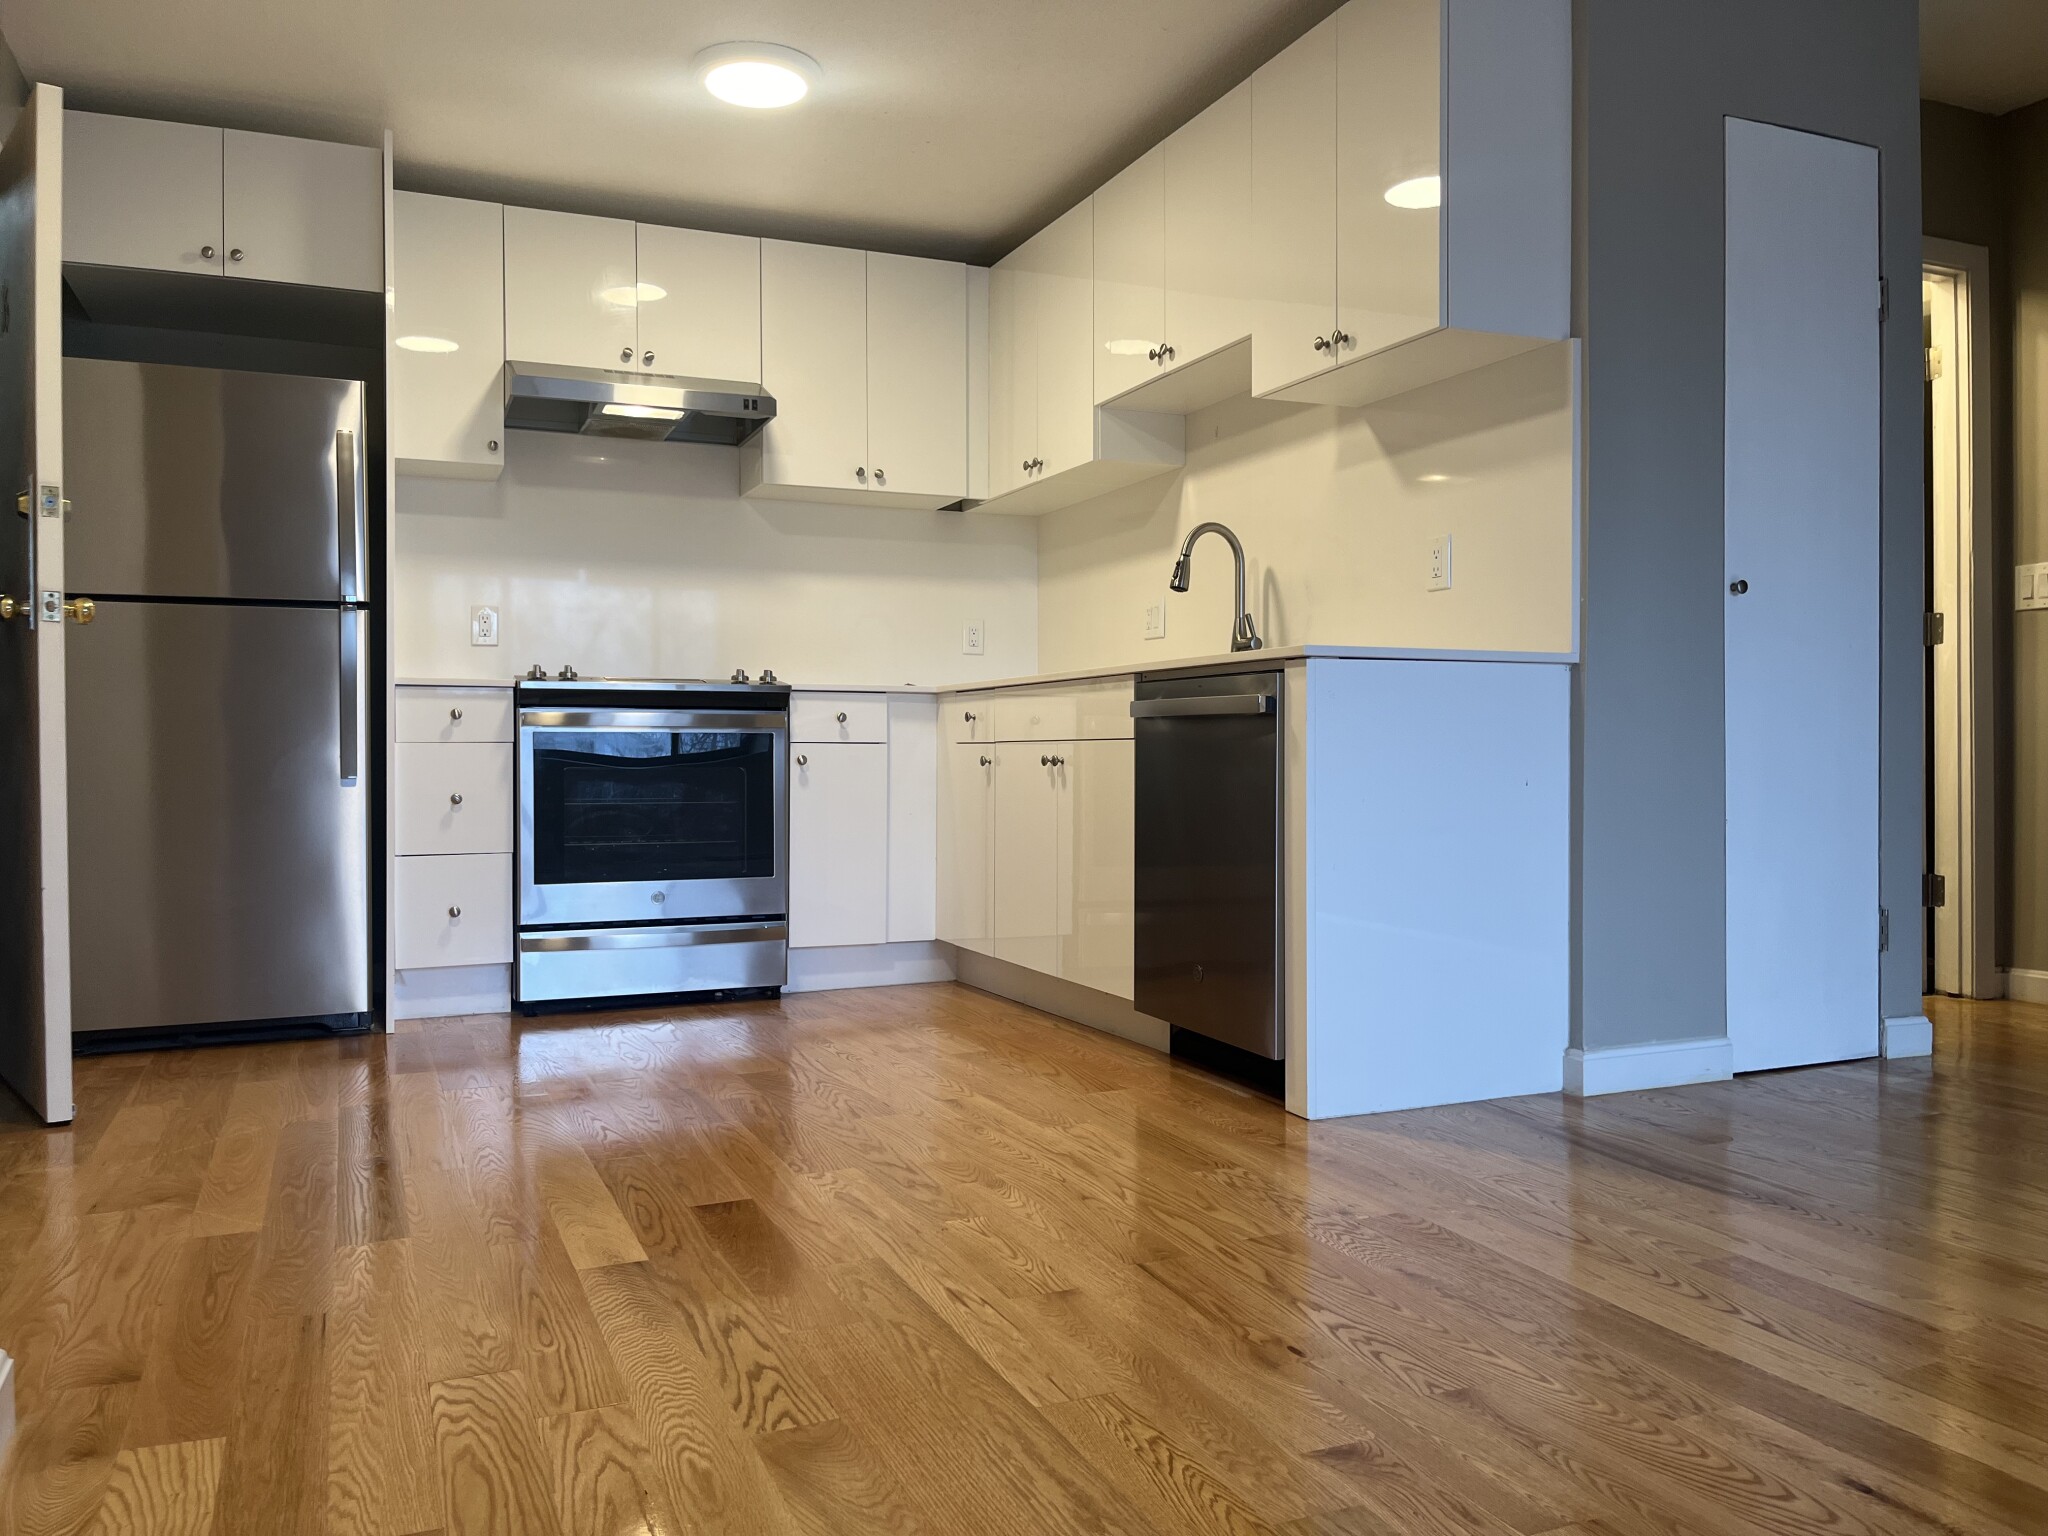 Photos of apartment on Calumet,Boston MA 02120